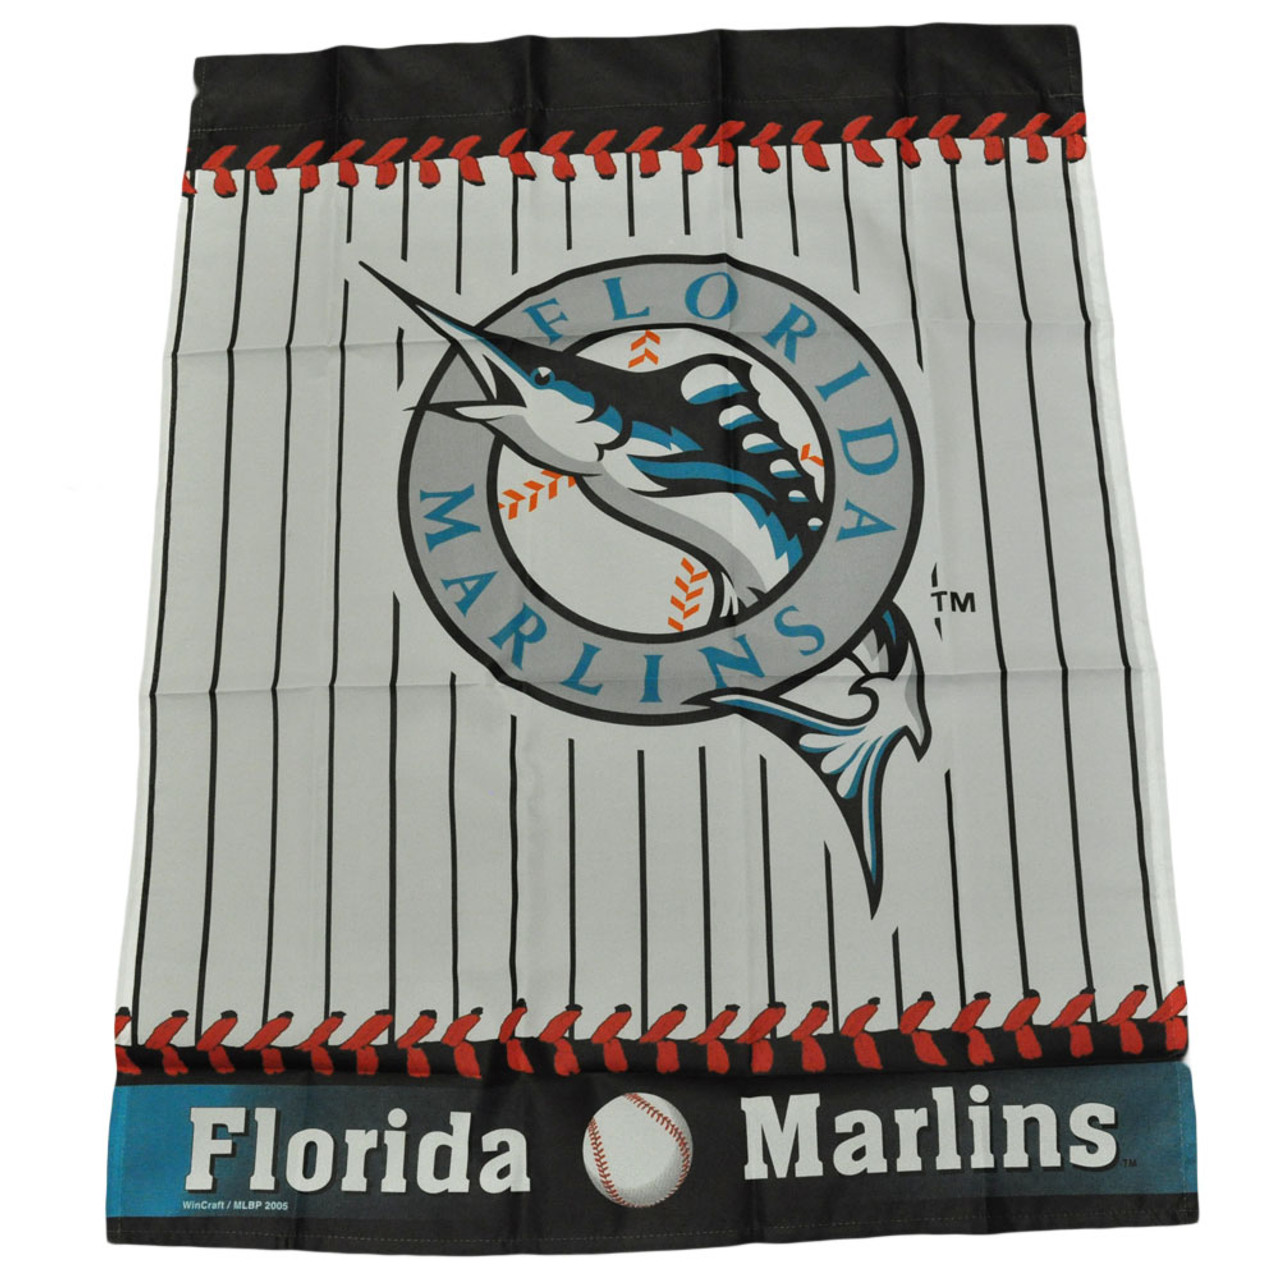 Florida Marlins 2003  Marlins, Mlb team logos, Miami marlins